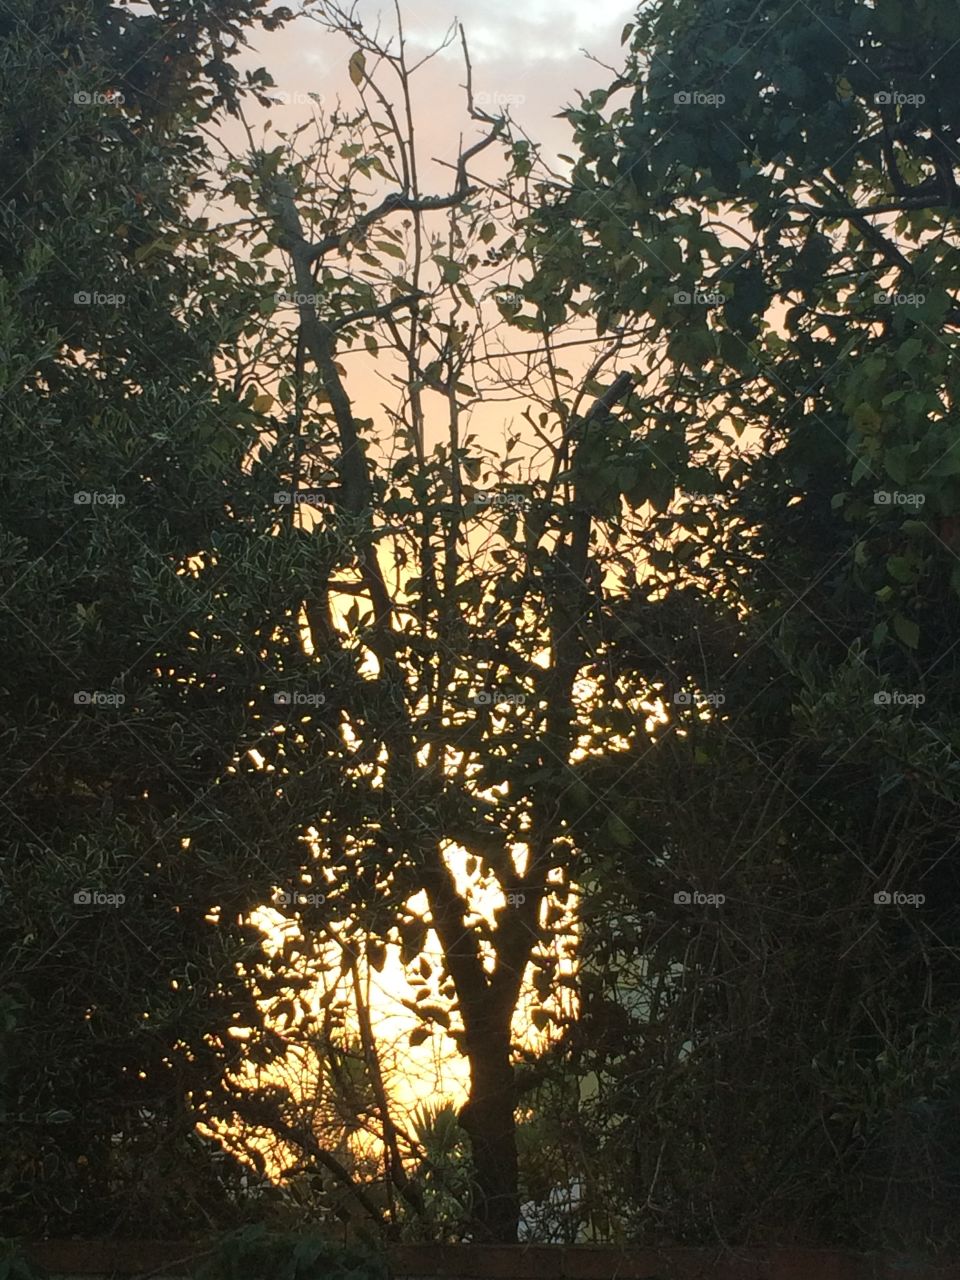 Sunrise through the trees 